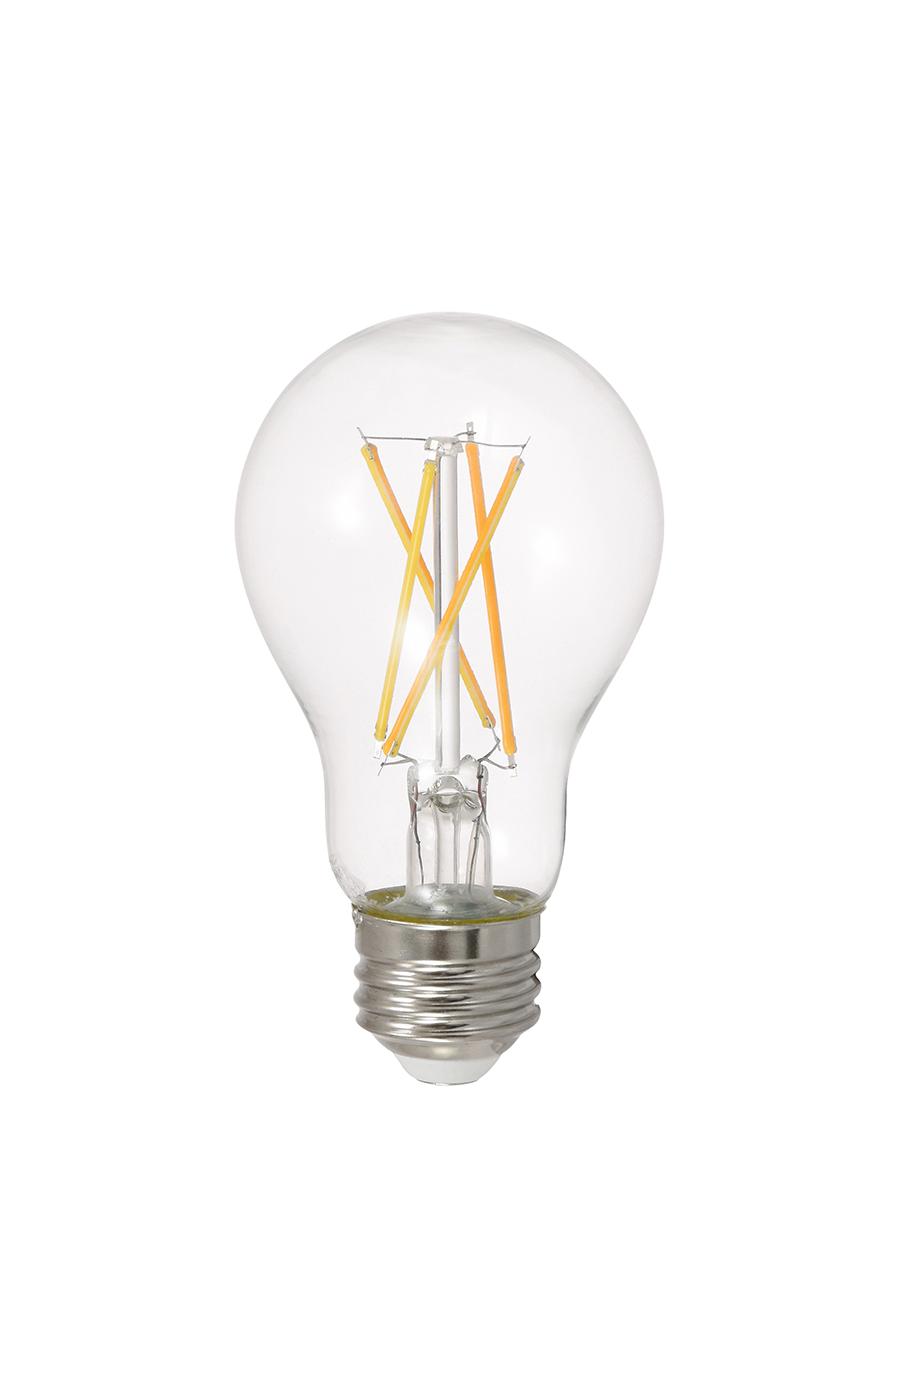 Sylvania TruWave A19 60-Watt Clear LED Light Bulbs - Soft White; image 2 of 2